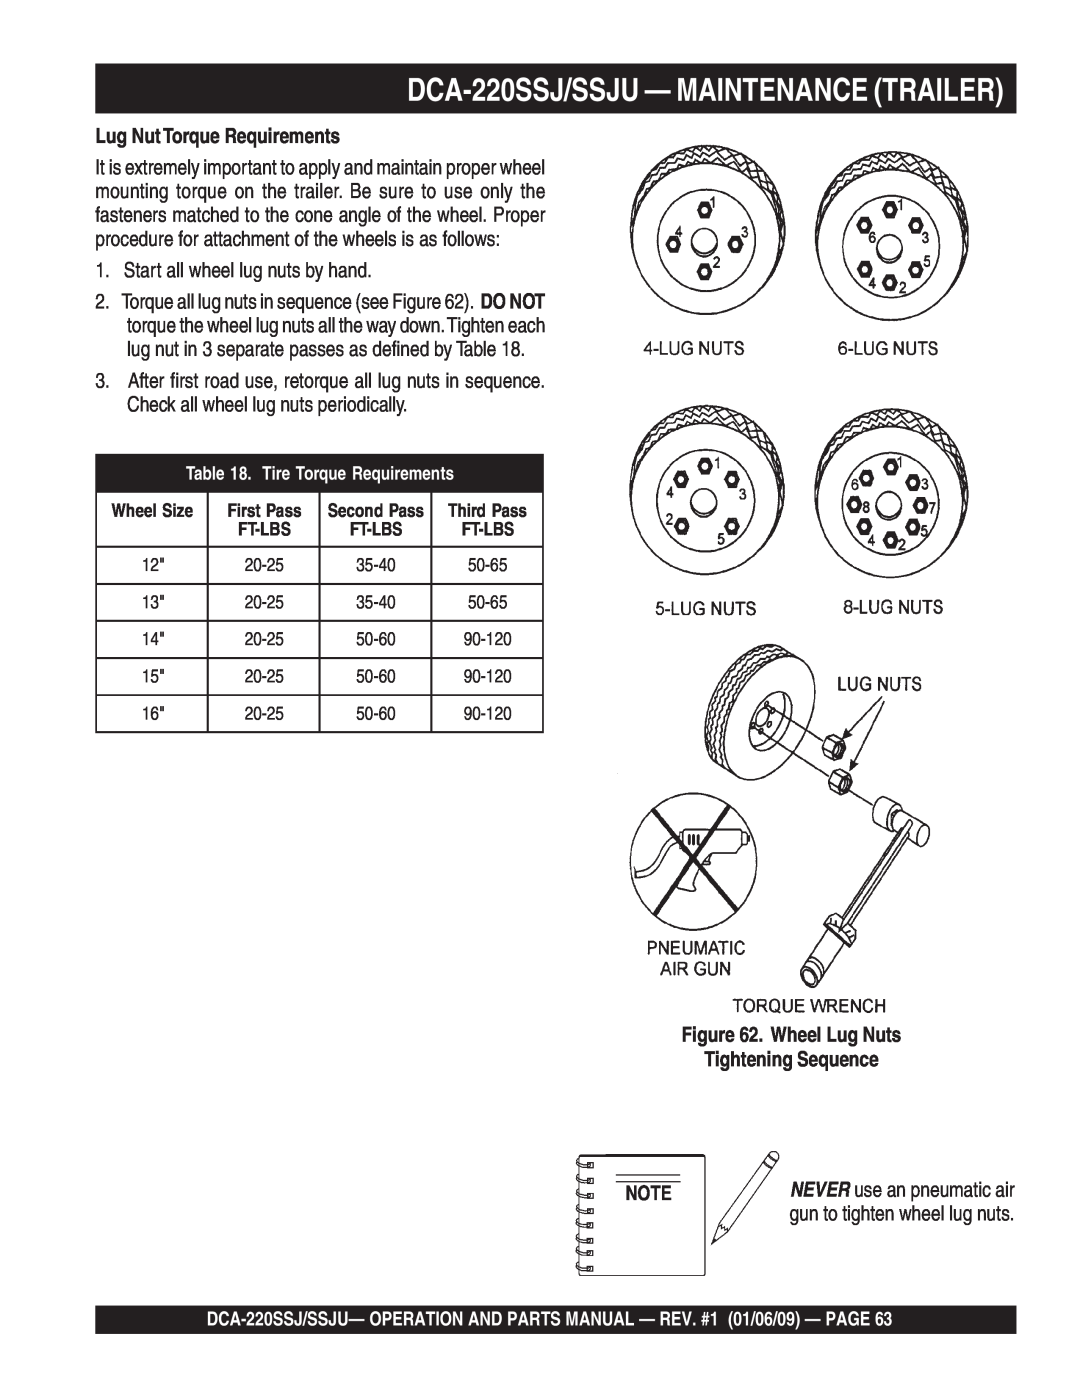 Multiquip DCA-220SSJ/SSJU - MAINTENANCE TRAILER, Lug Nut Torque Requirements, Wheel Lug Nuts Tightening Sequence 